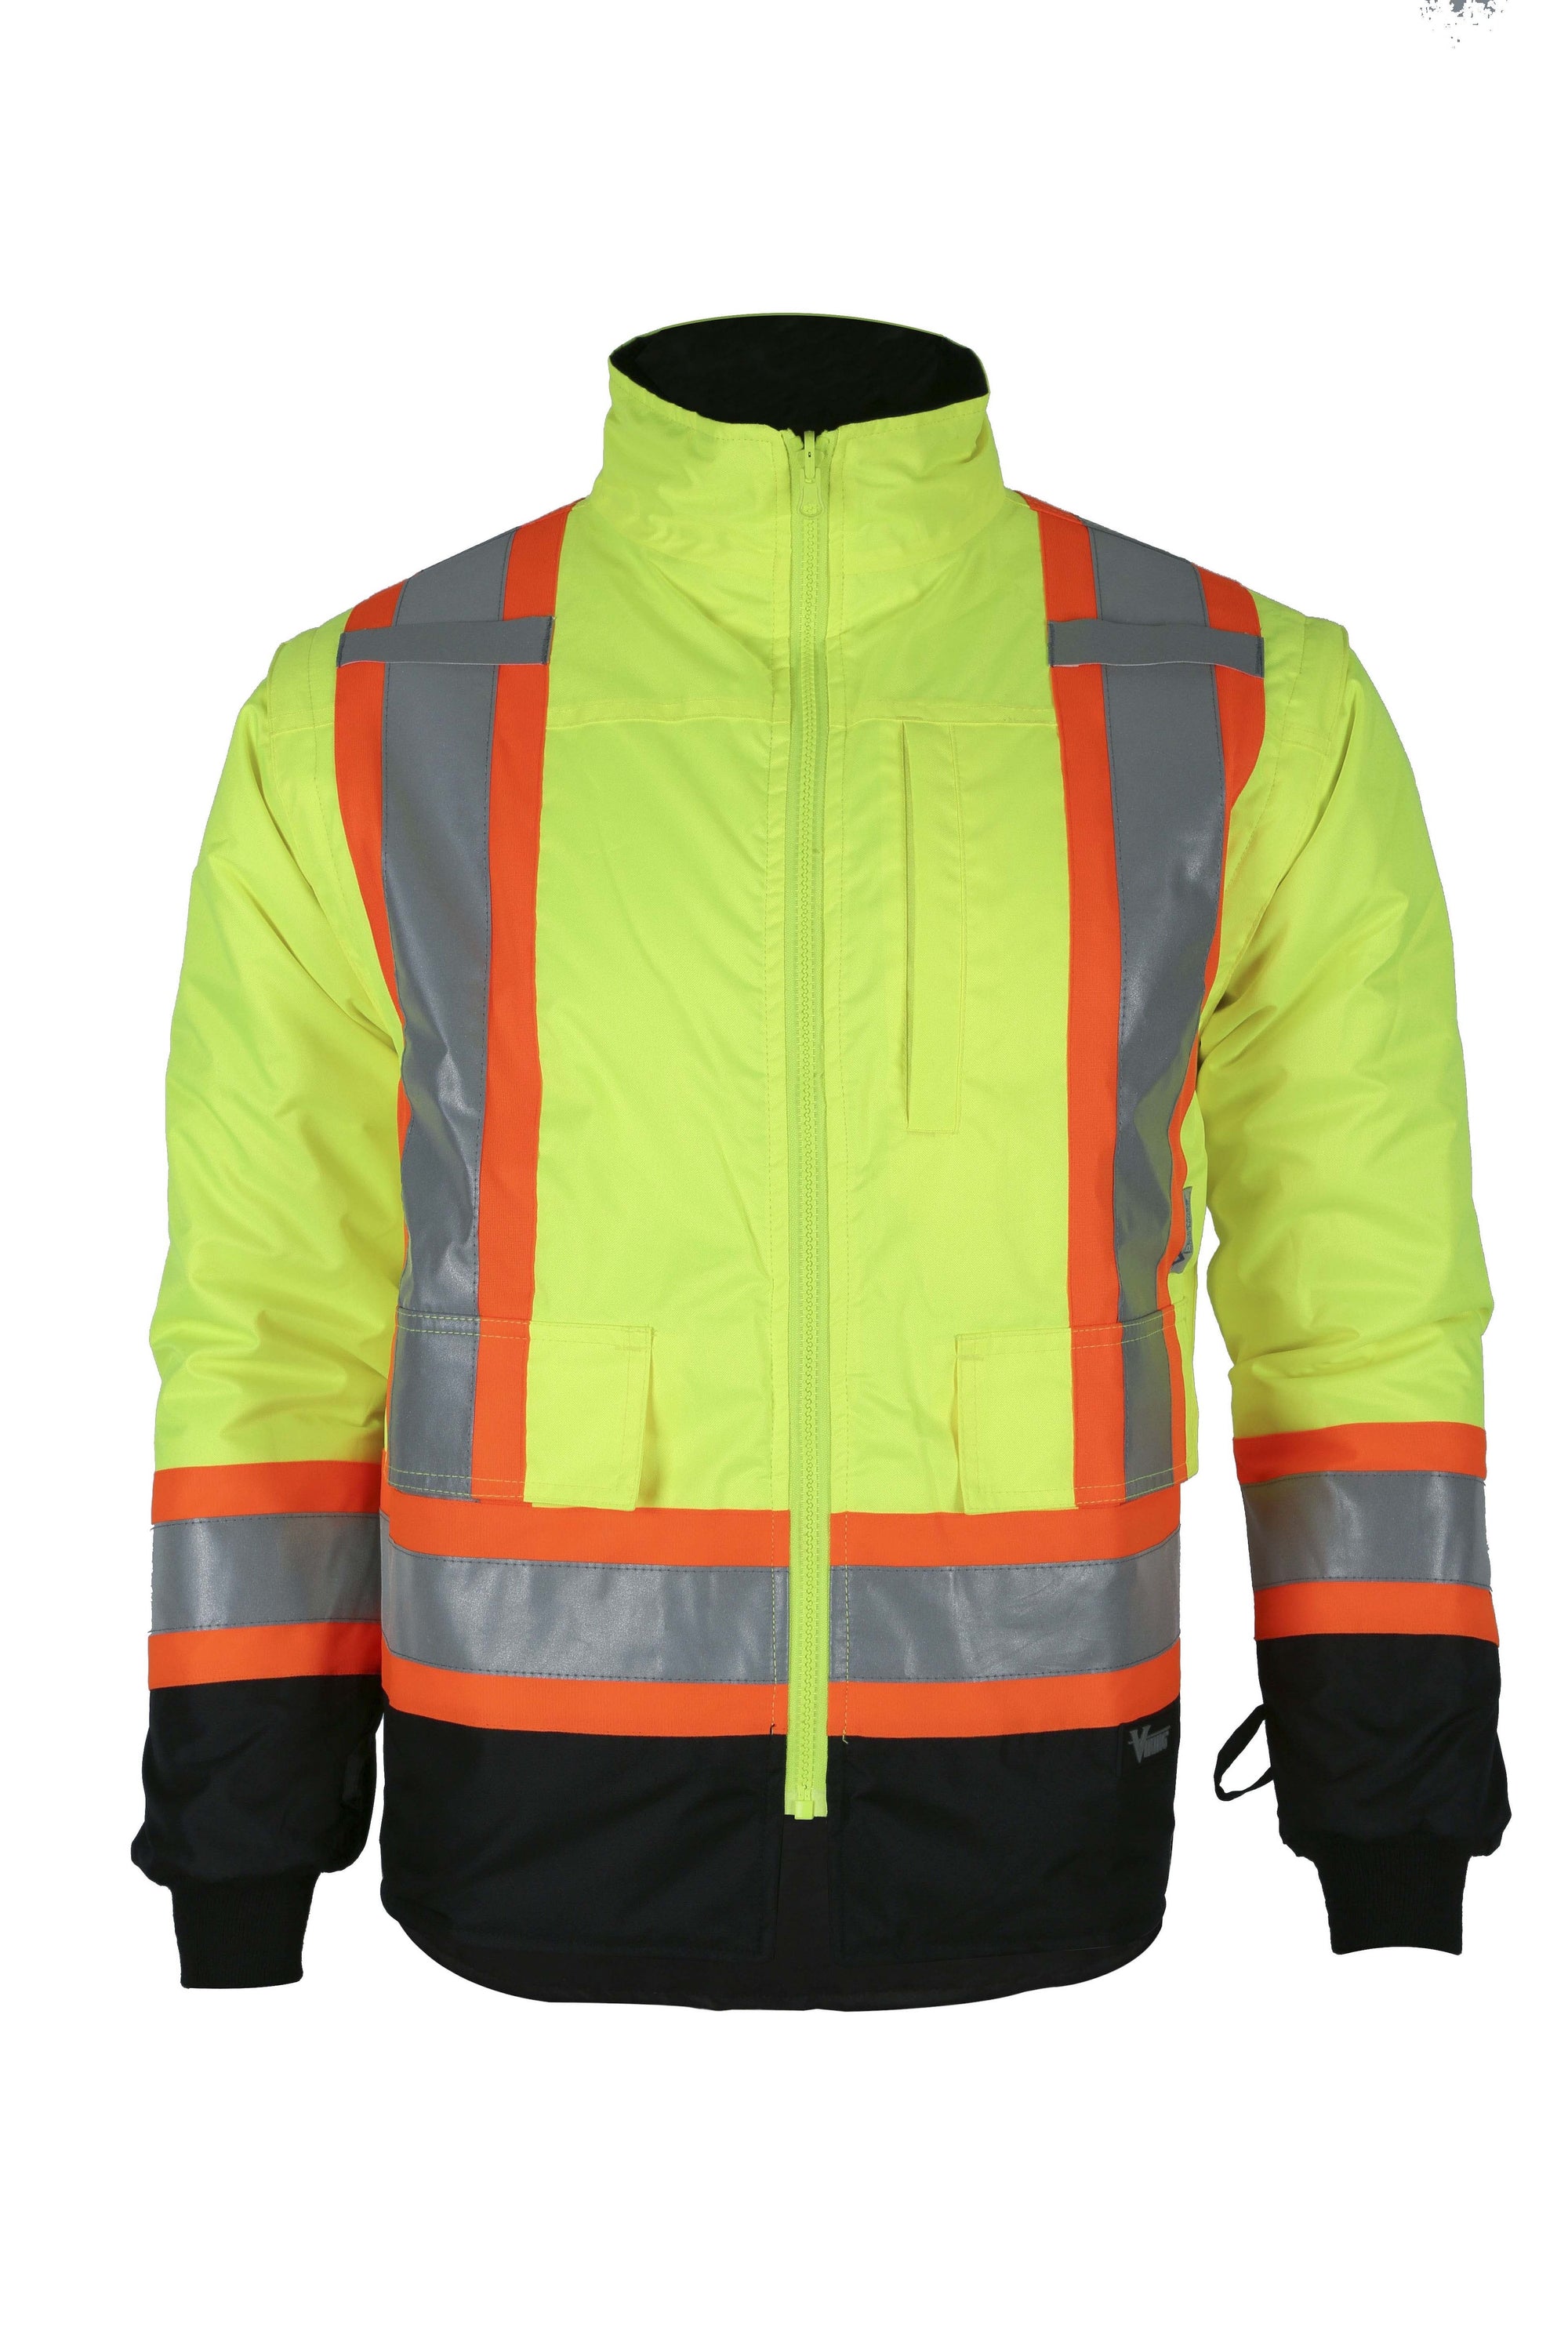 Viking Men's Handyman® Waterproof Class 1 Hi-Vis 7-in-1 Hooded Rain Jacket_Hi-Vis Green - Work World - Workwear, Work Boots, Safety Gear